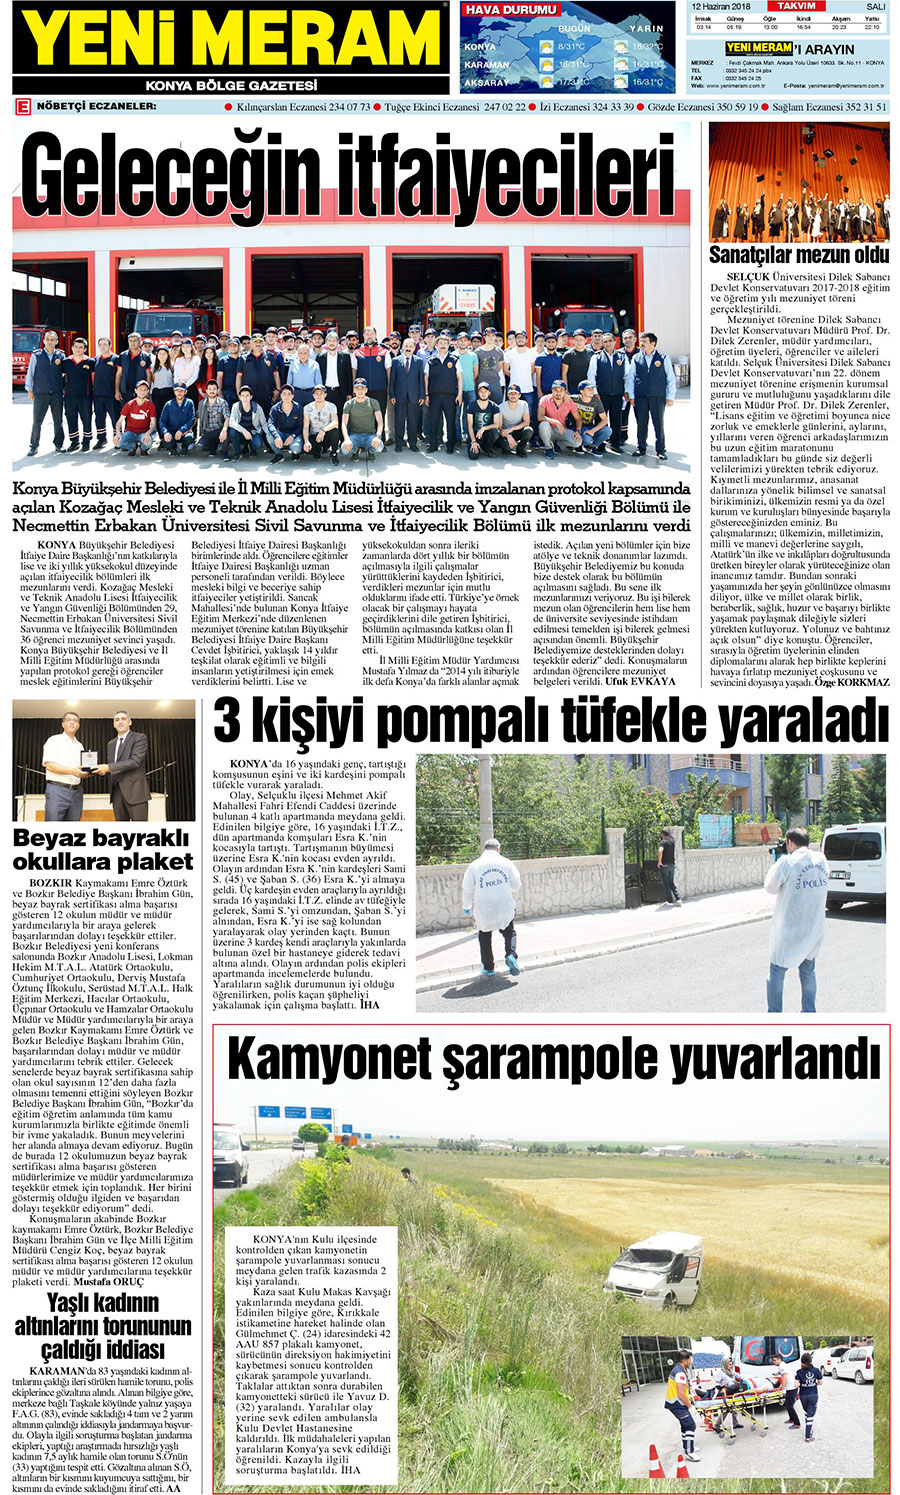 12 Haziran 2018 Yeni Meram Gazetesi